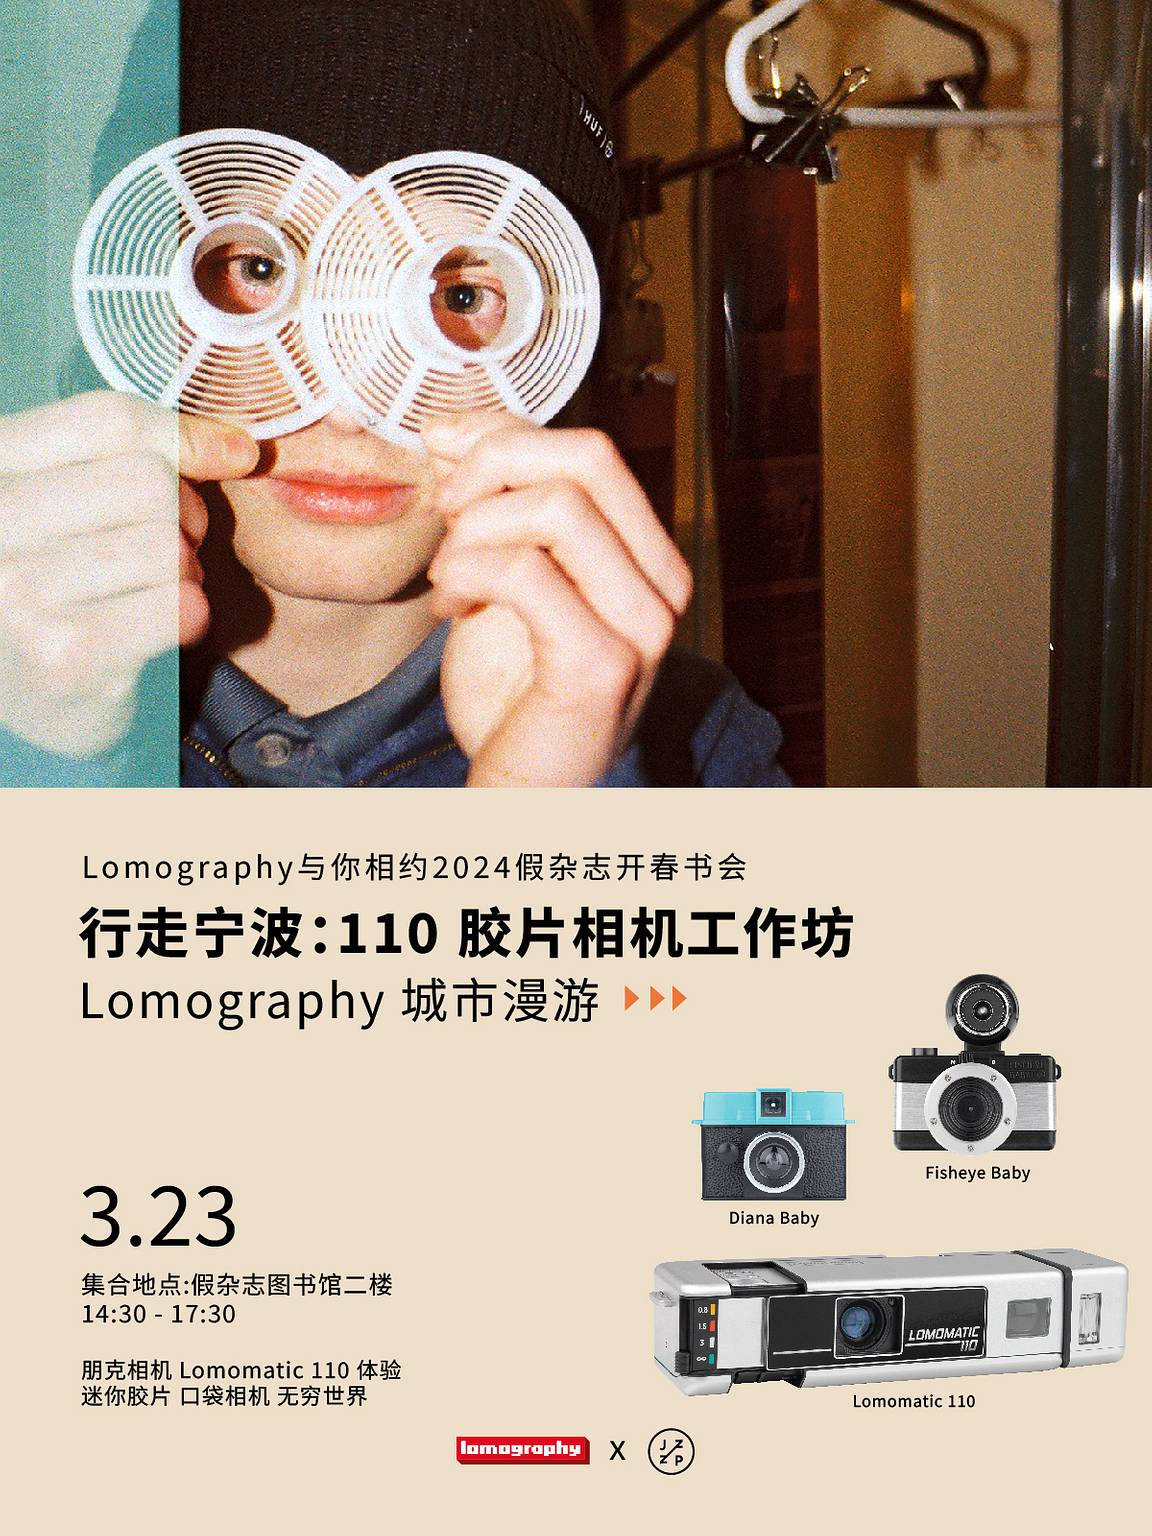 Jiazazhi x Lomography: A Photography Walk with 110 Film Cameras